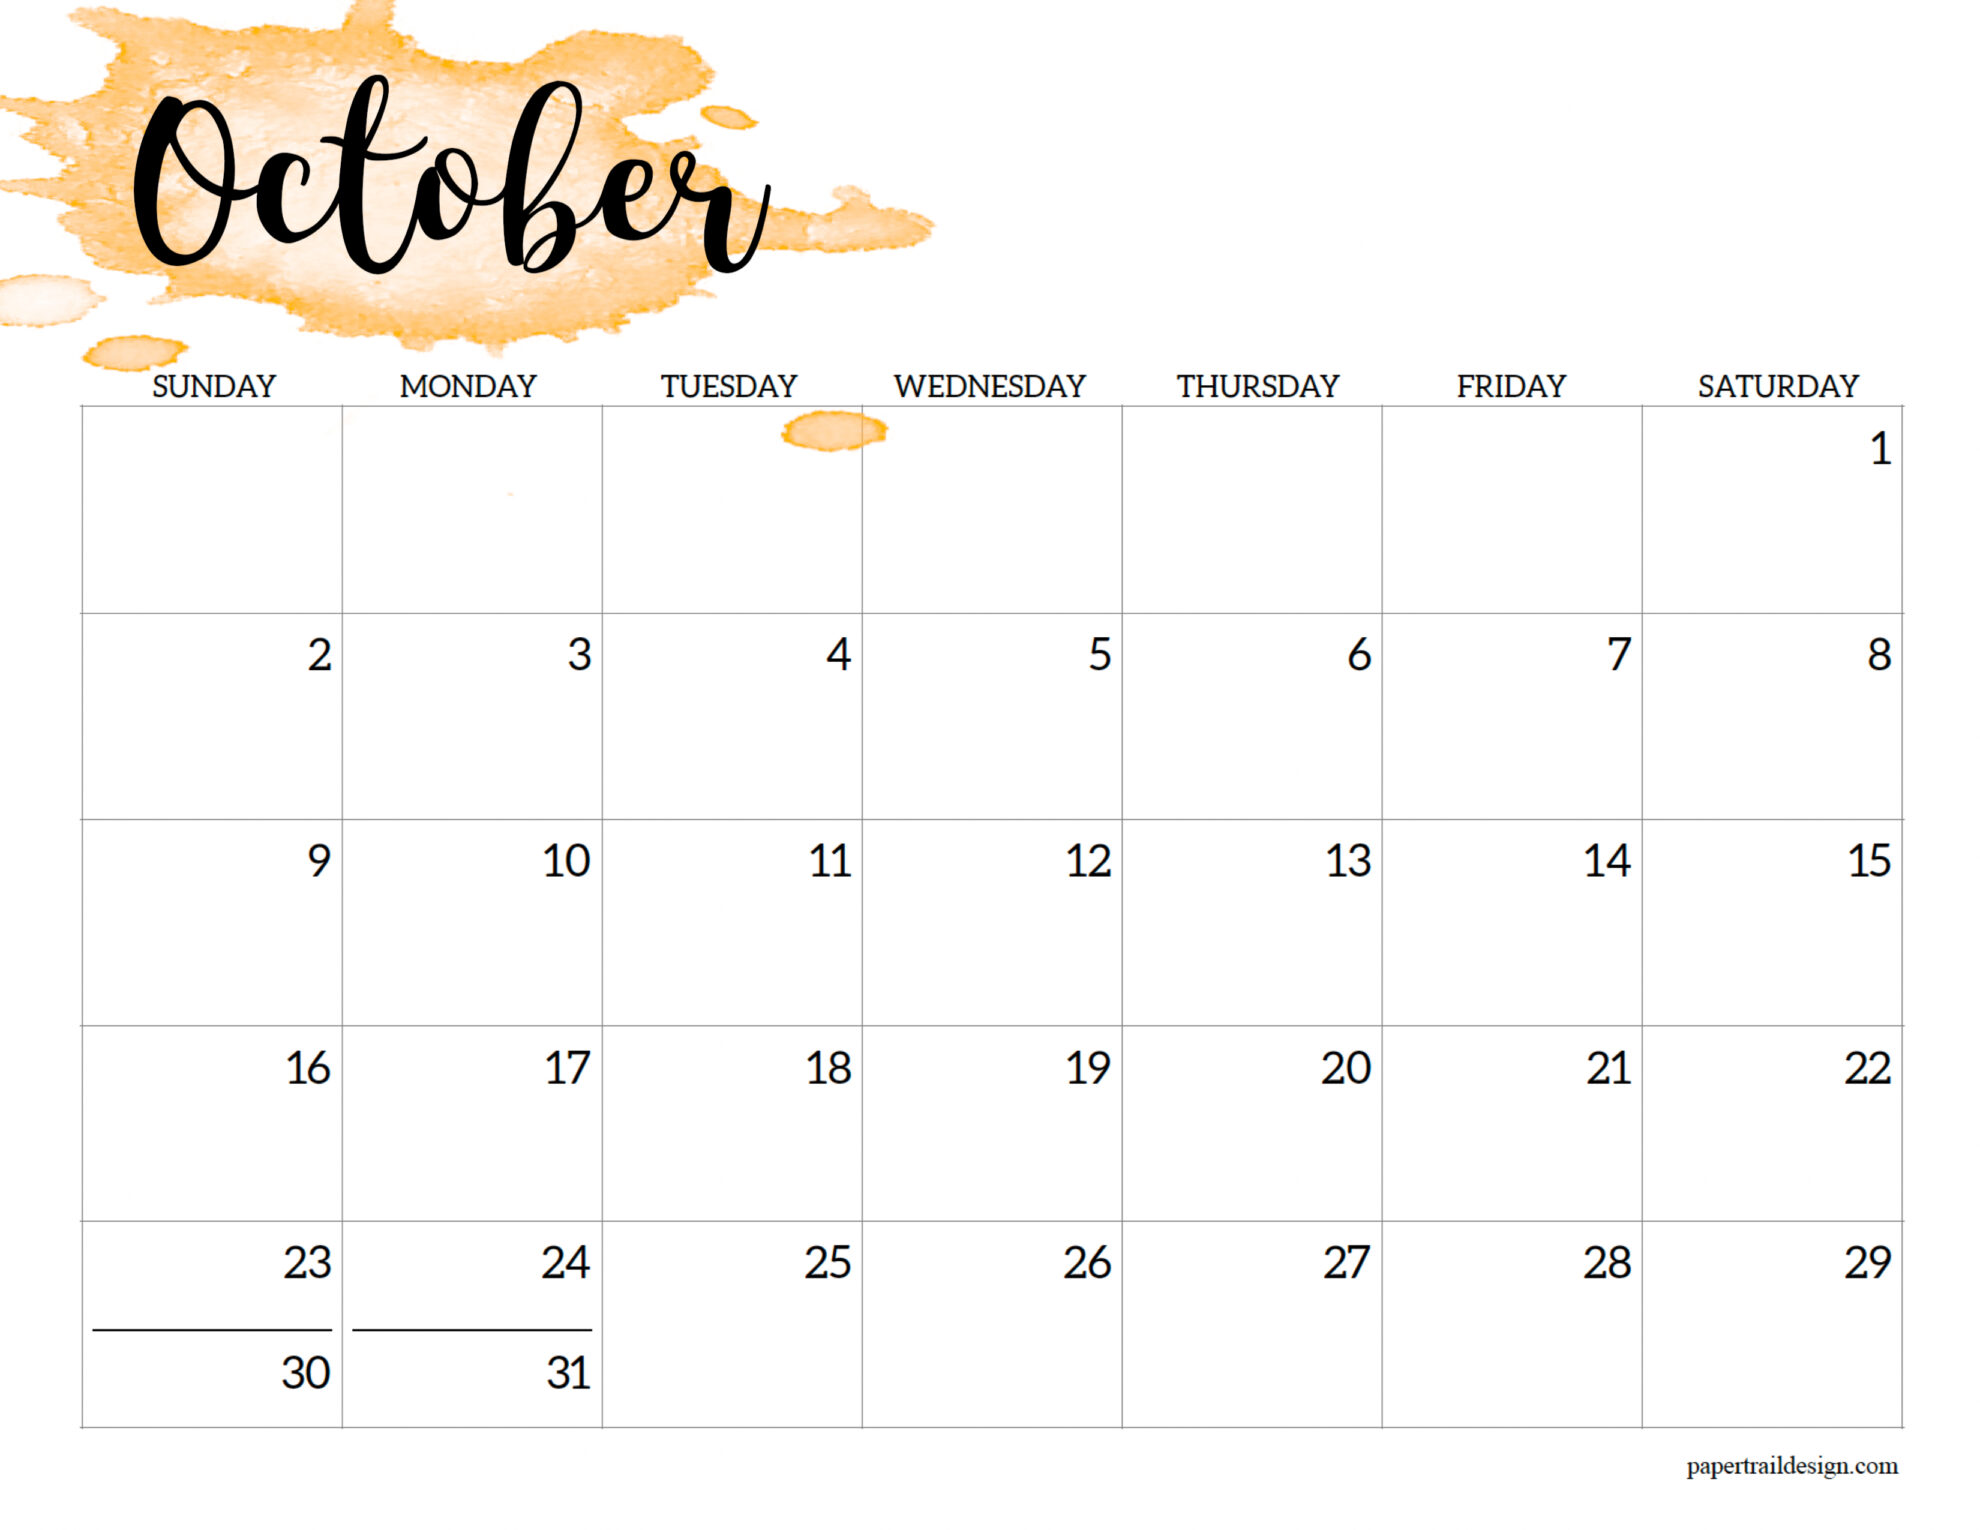 October 2022 Calendar Printable 2022 Calendar Printable - Watercolor - Paper Trail Design